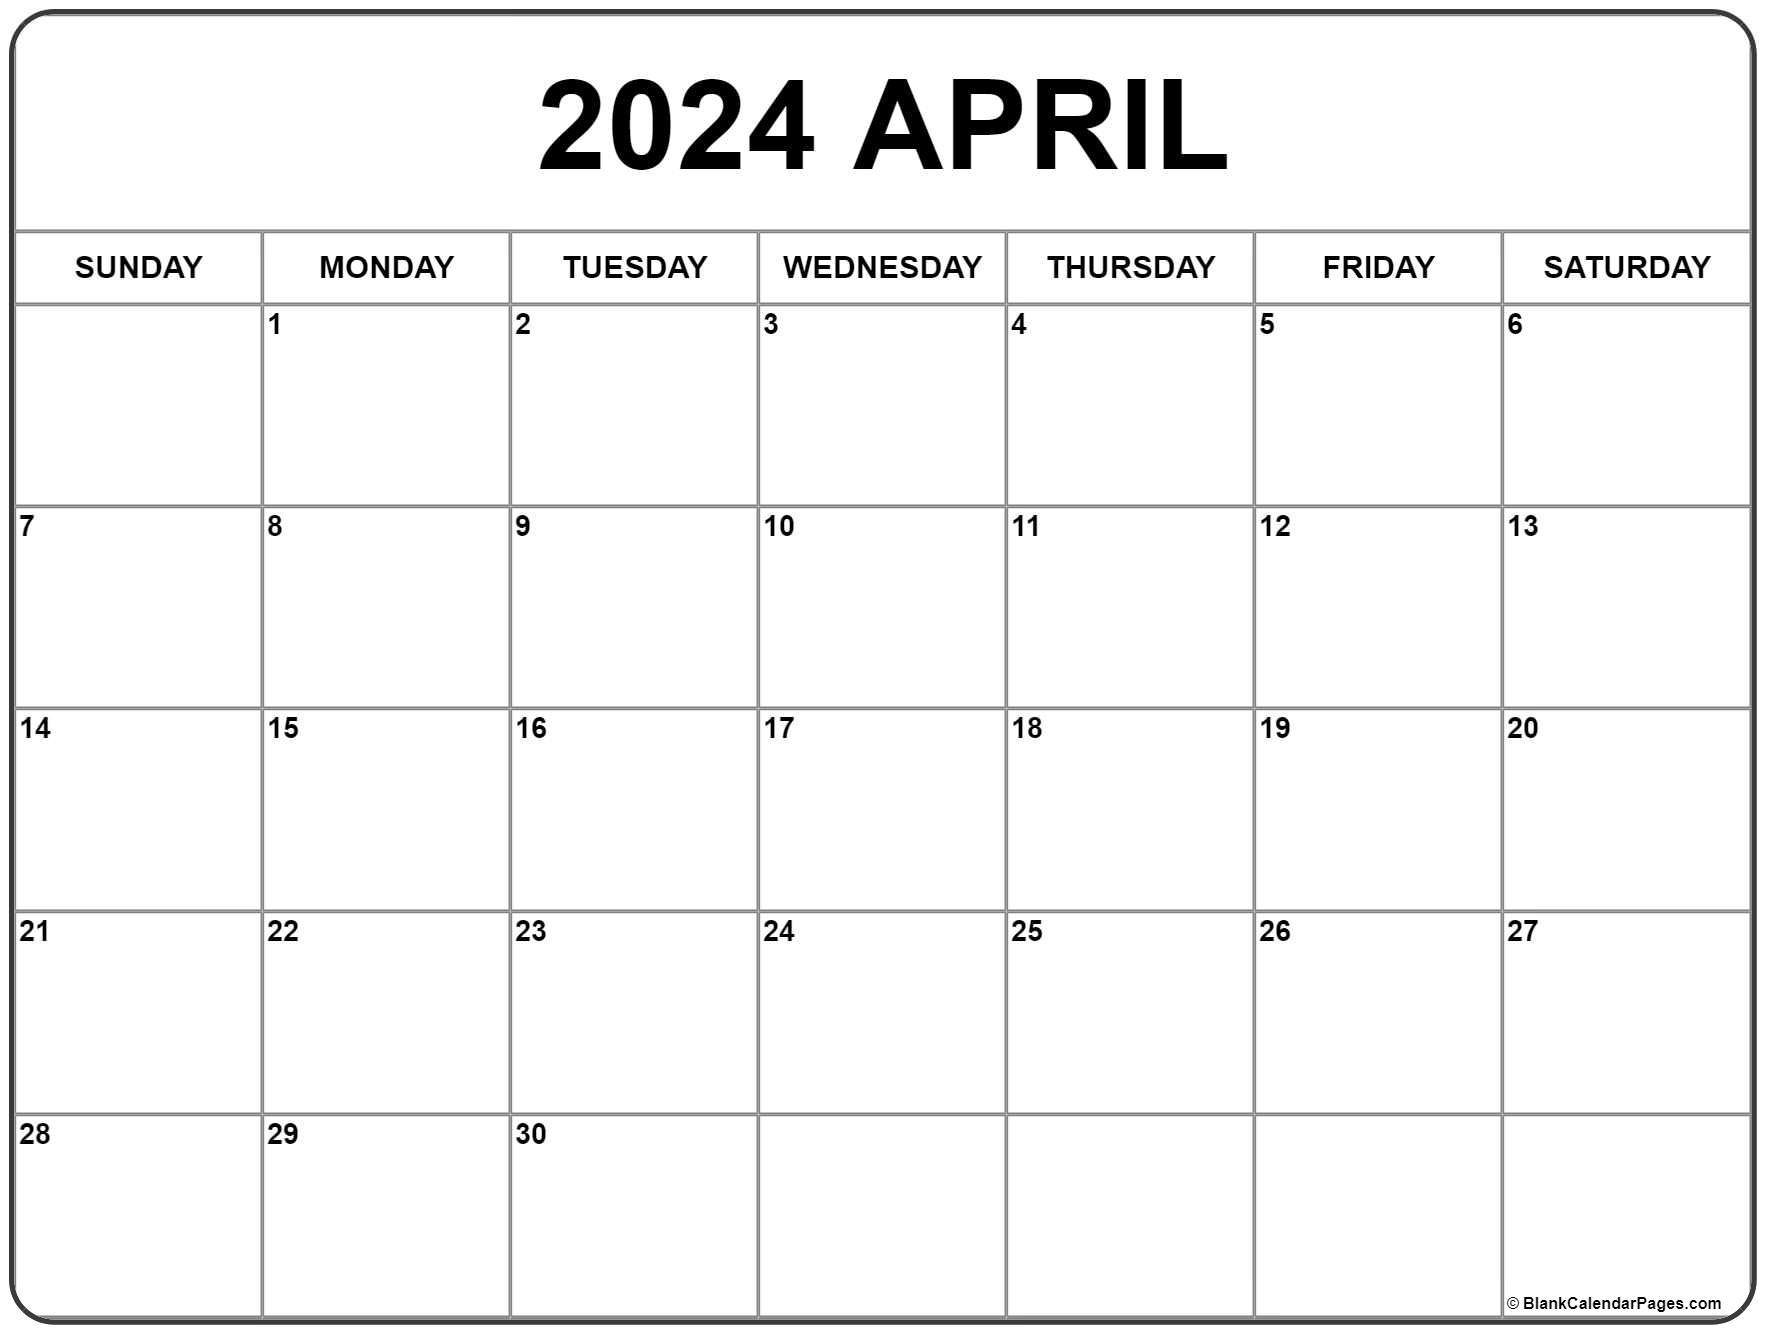 March April 2022 Calendar April 2022 Calendar | Free Printable Calendar Templates